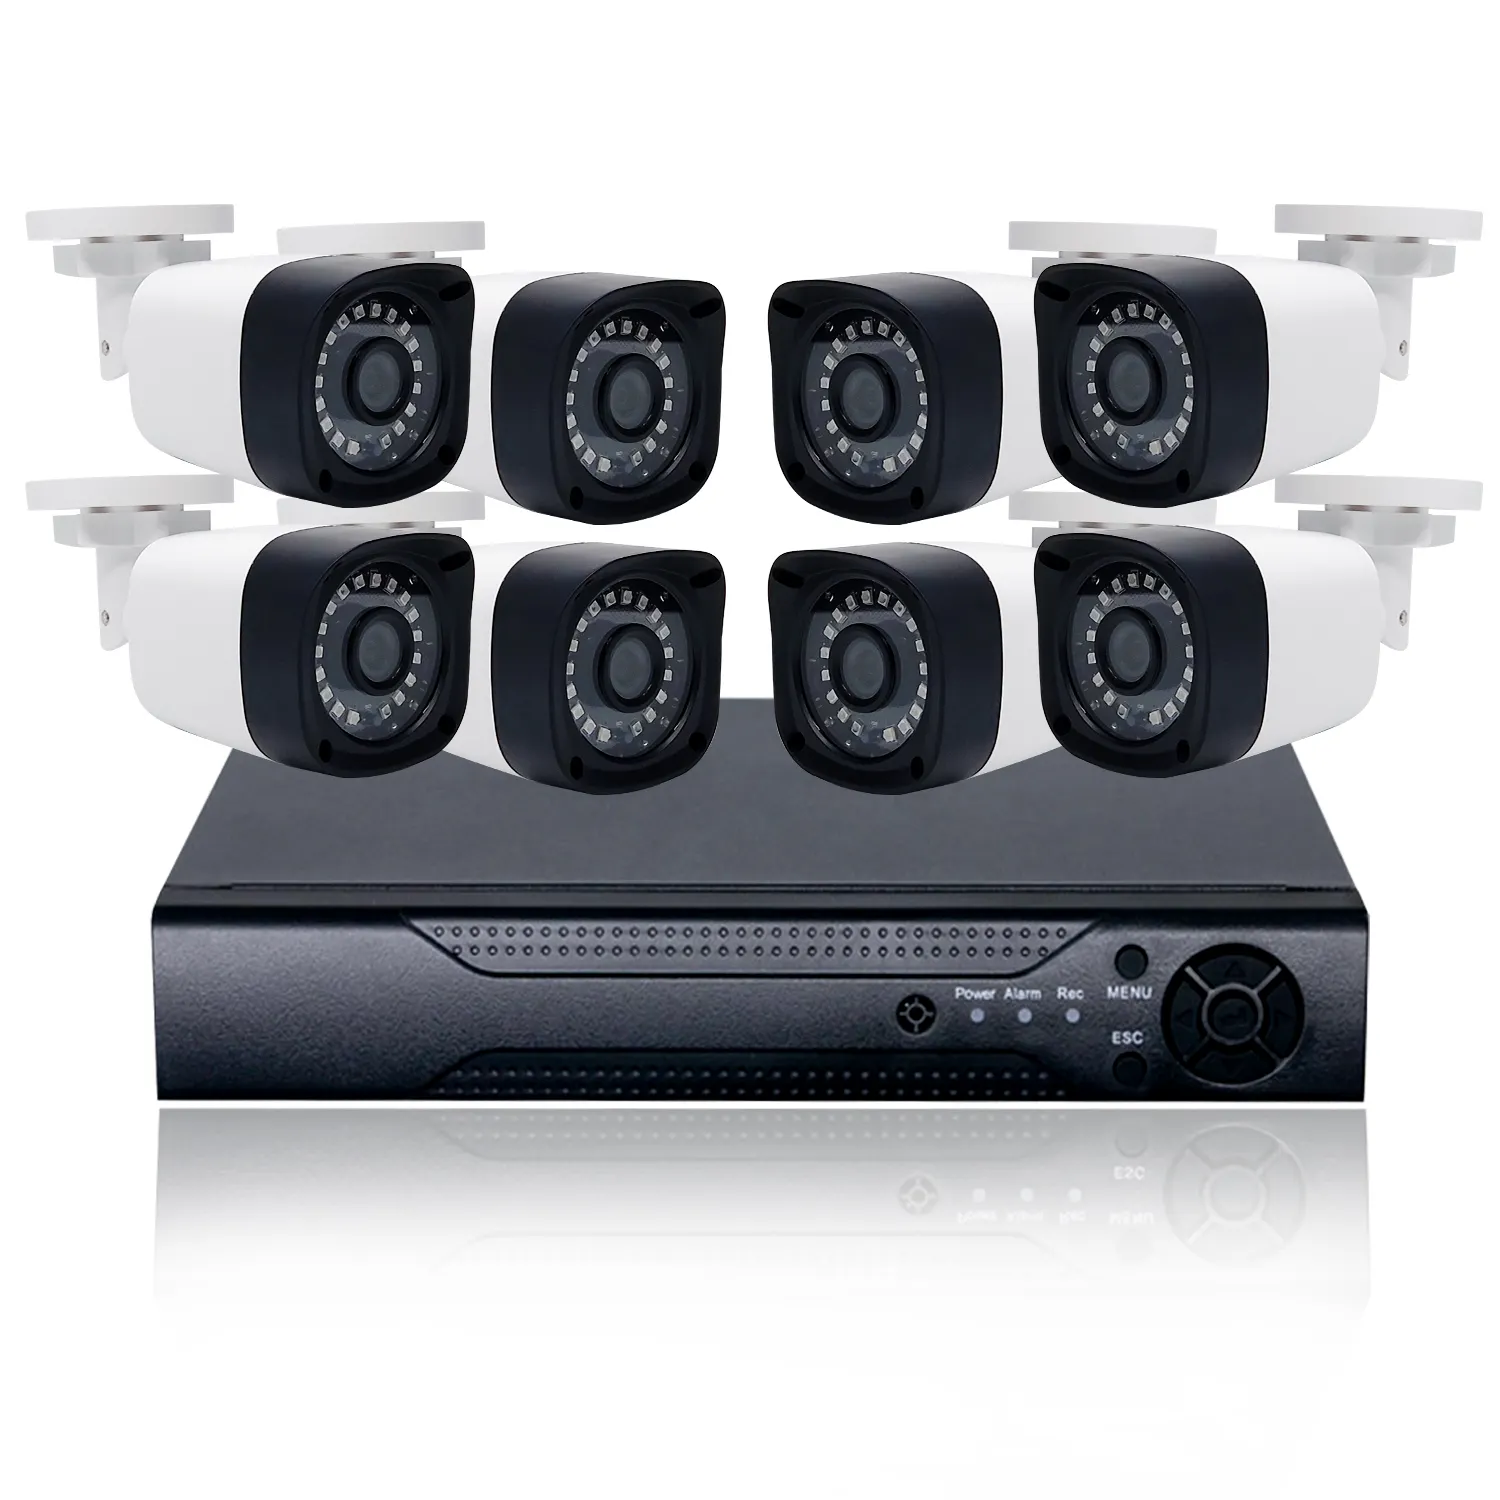 WESECUU хит продаж, система видеонаблюдения 2 Мп, 5 МП, 8 Мп, DVR, 8-канальная система видеонаблюдения, камера безопасности, аналоговая AHD камера